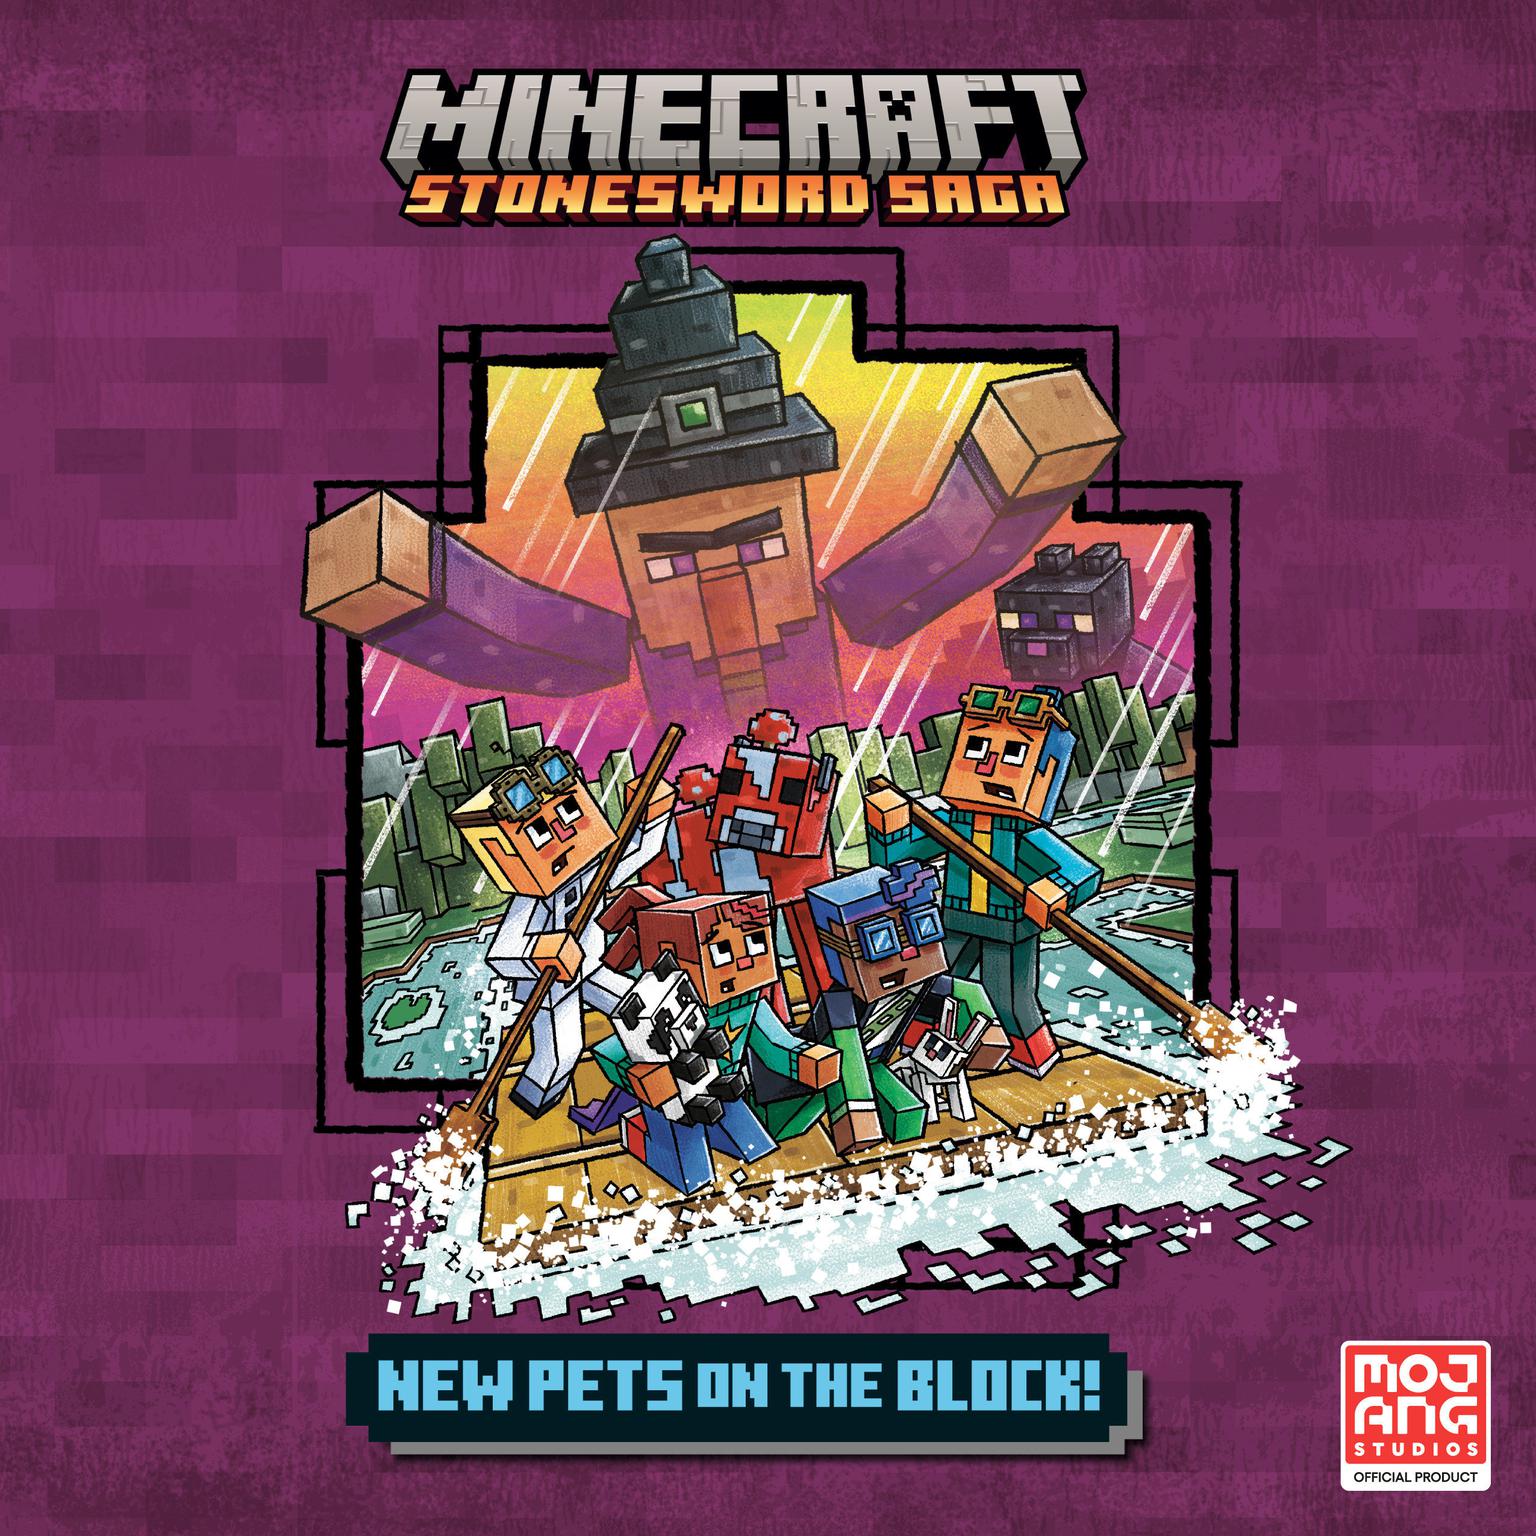 New Pets on the Block! (Minecraft Stonesword Saga #3) Audiobook, by Nick Eliopulos